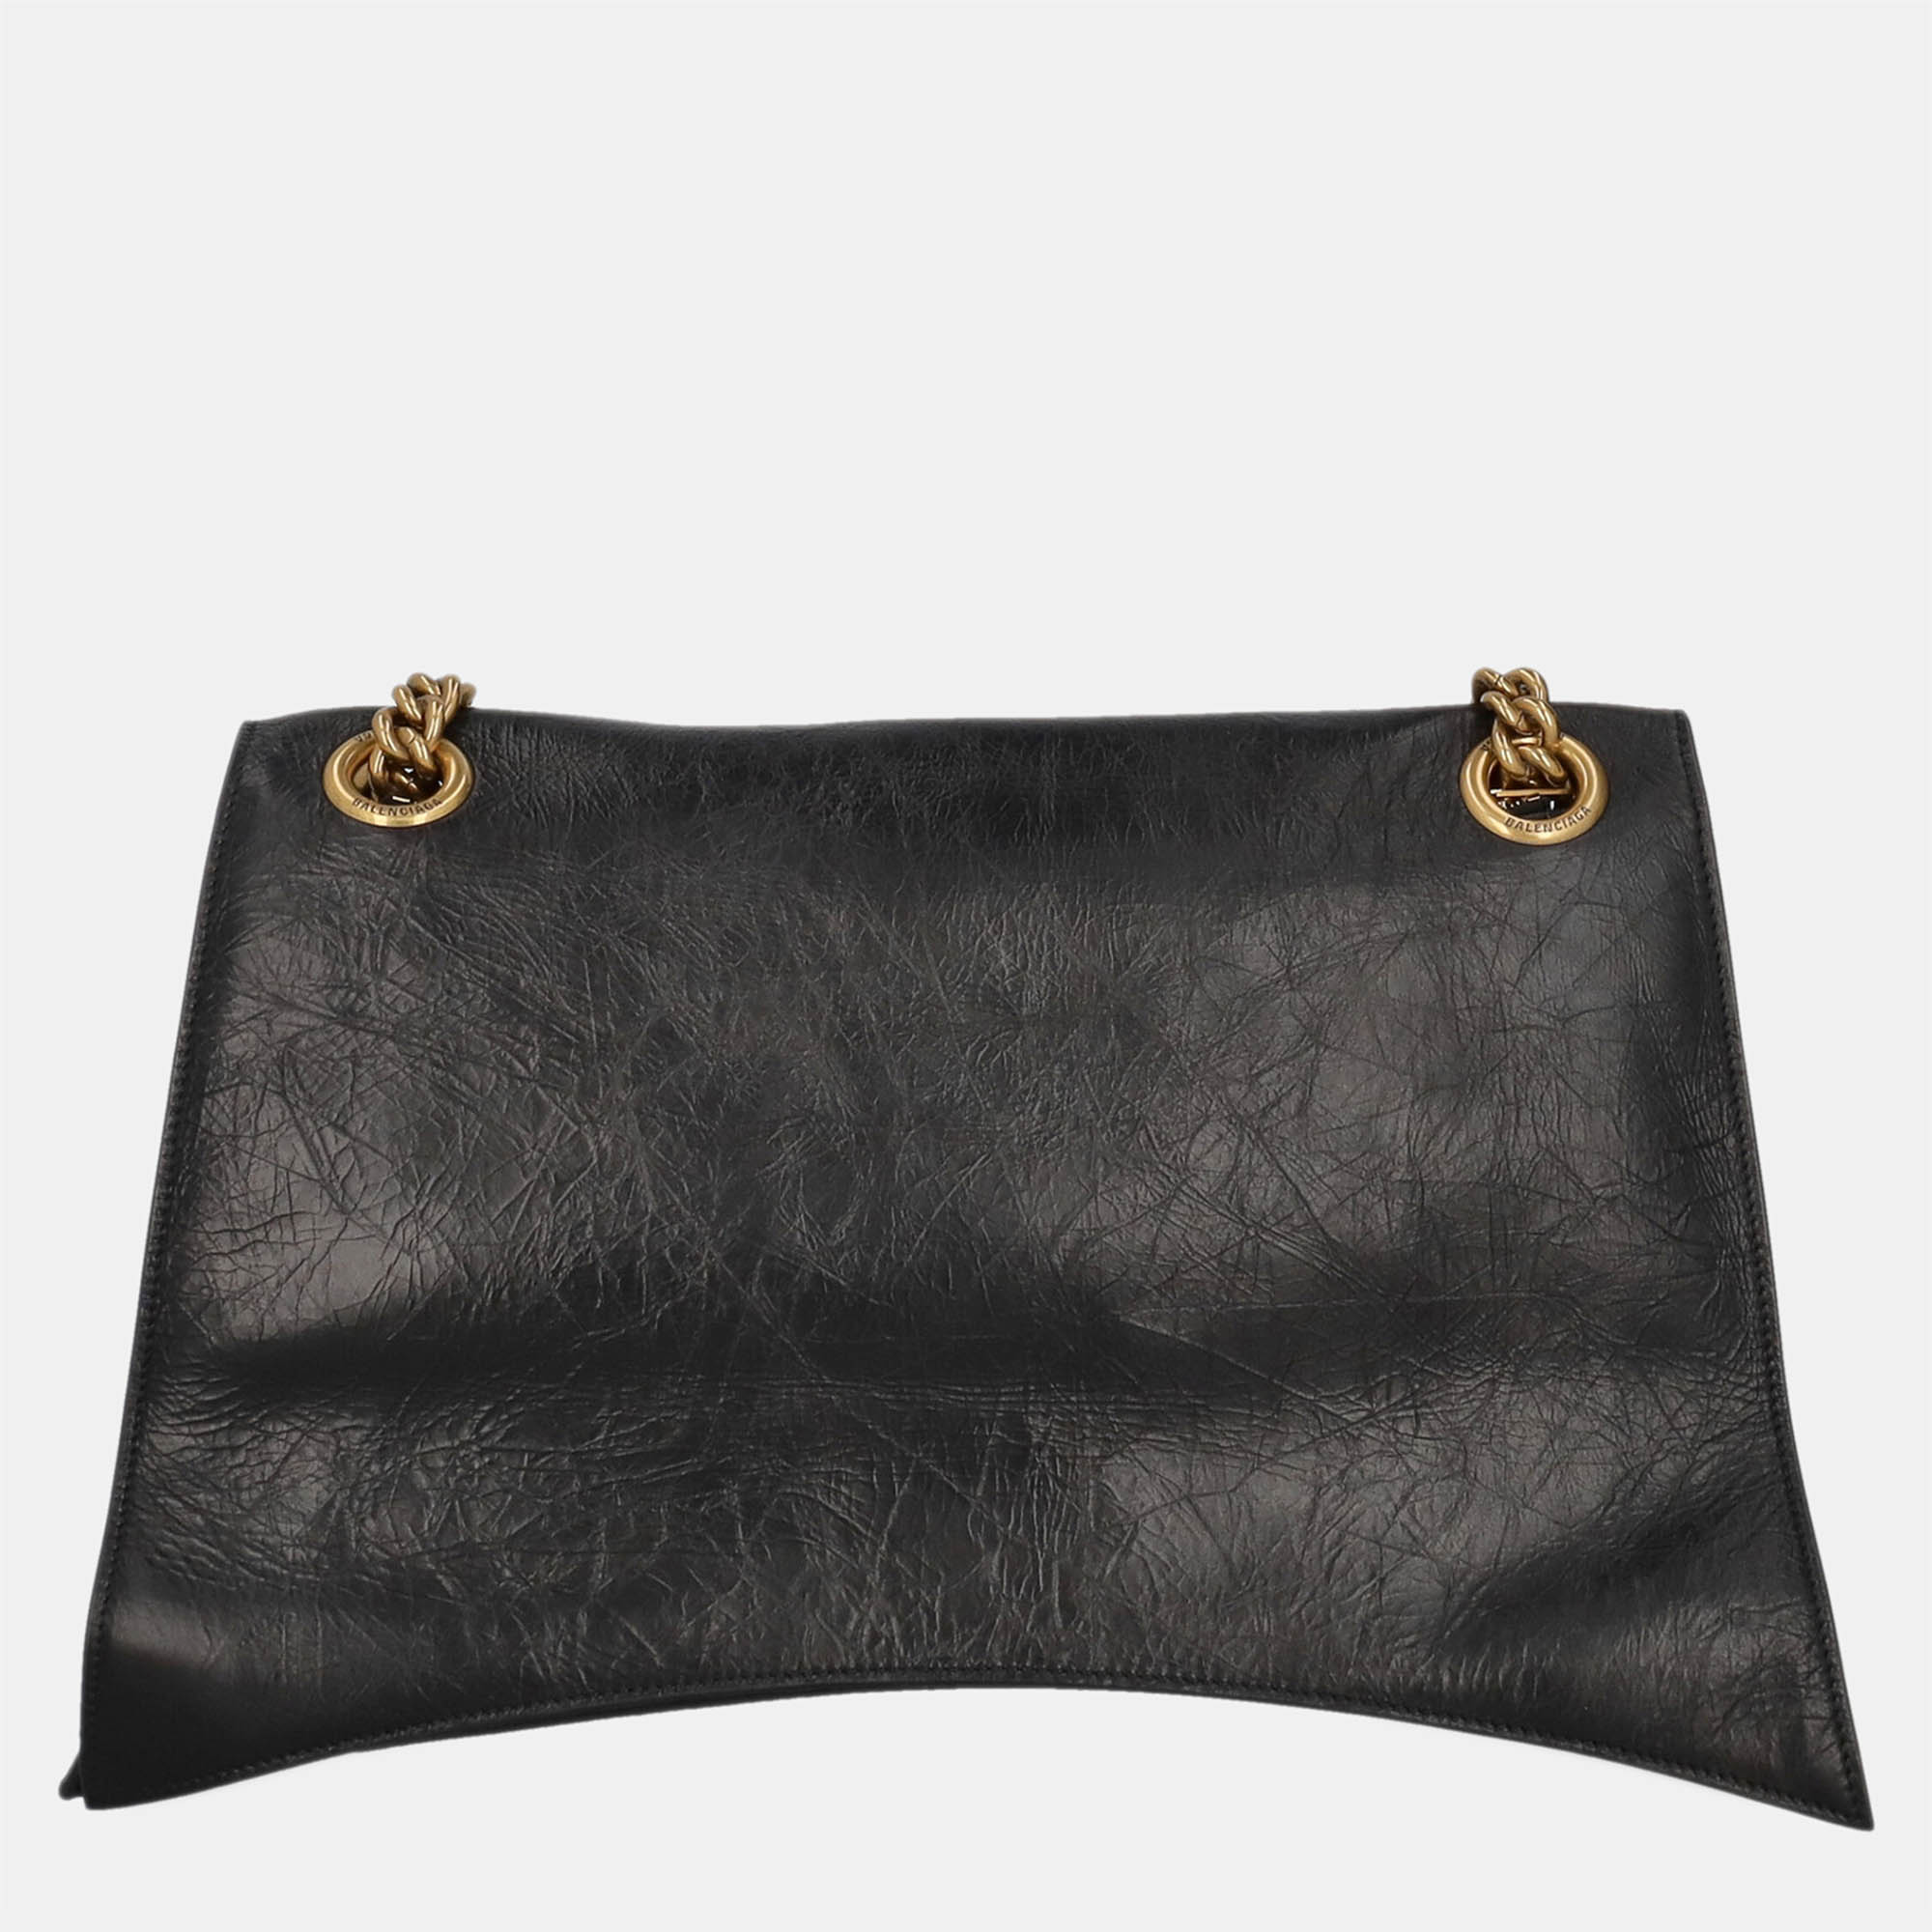 Balenciaga Hourglass -  Women's Leather Cross Body Bag - Black - One Size